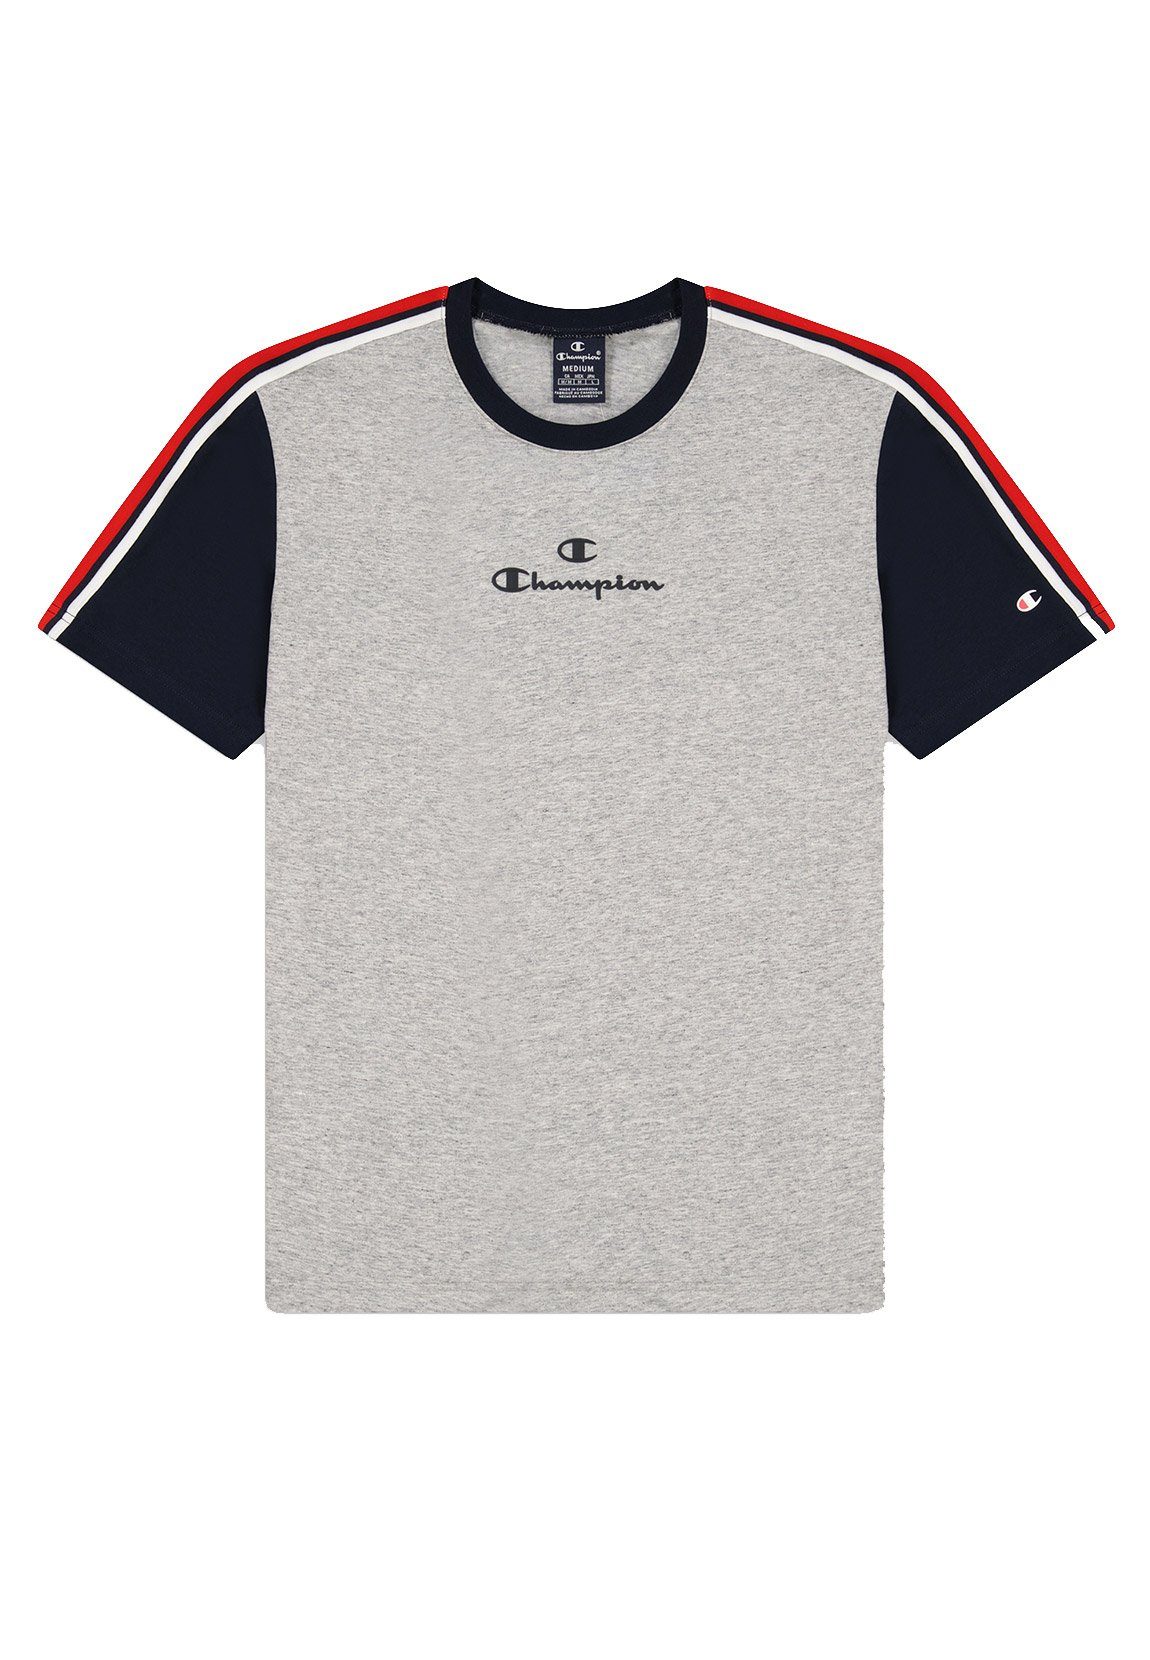 Herren Champion EM021 Champion 218768 NNY NOXM Grau T-Shirt T-Shirt